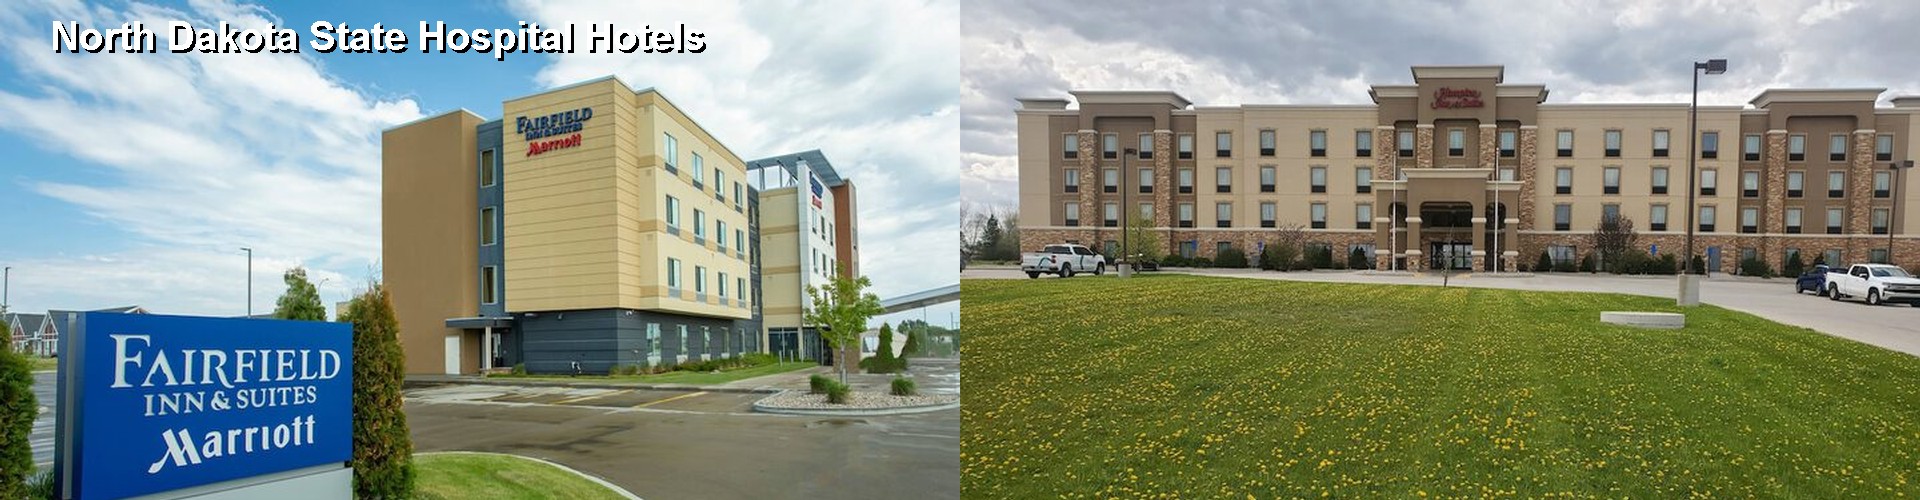 5 Best Hotels near North Dakota State Hospital